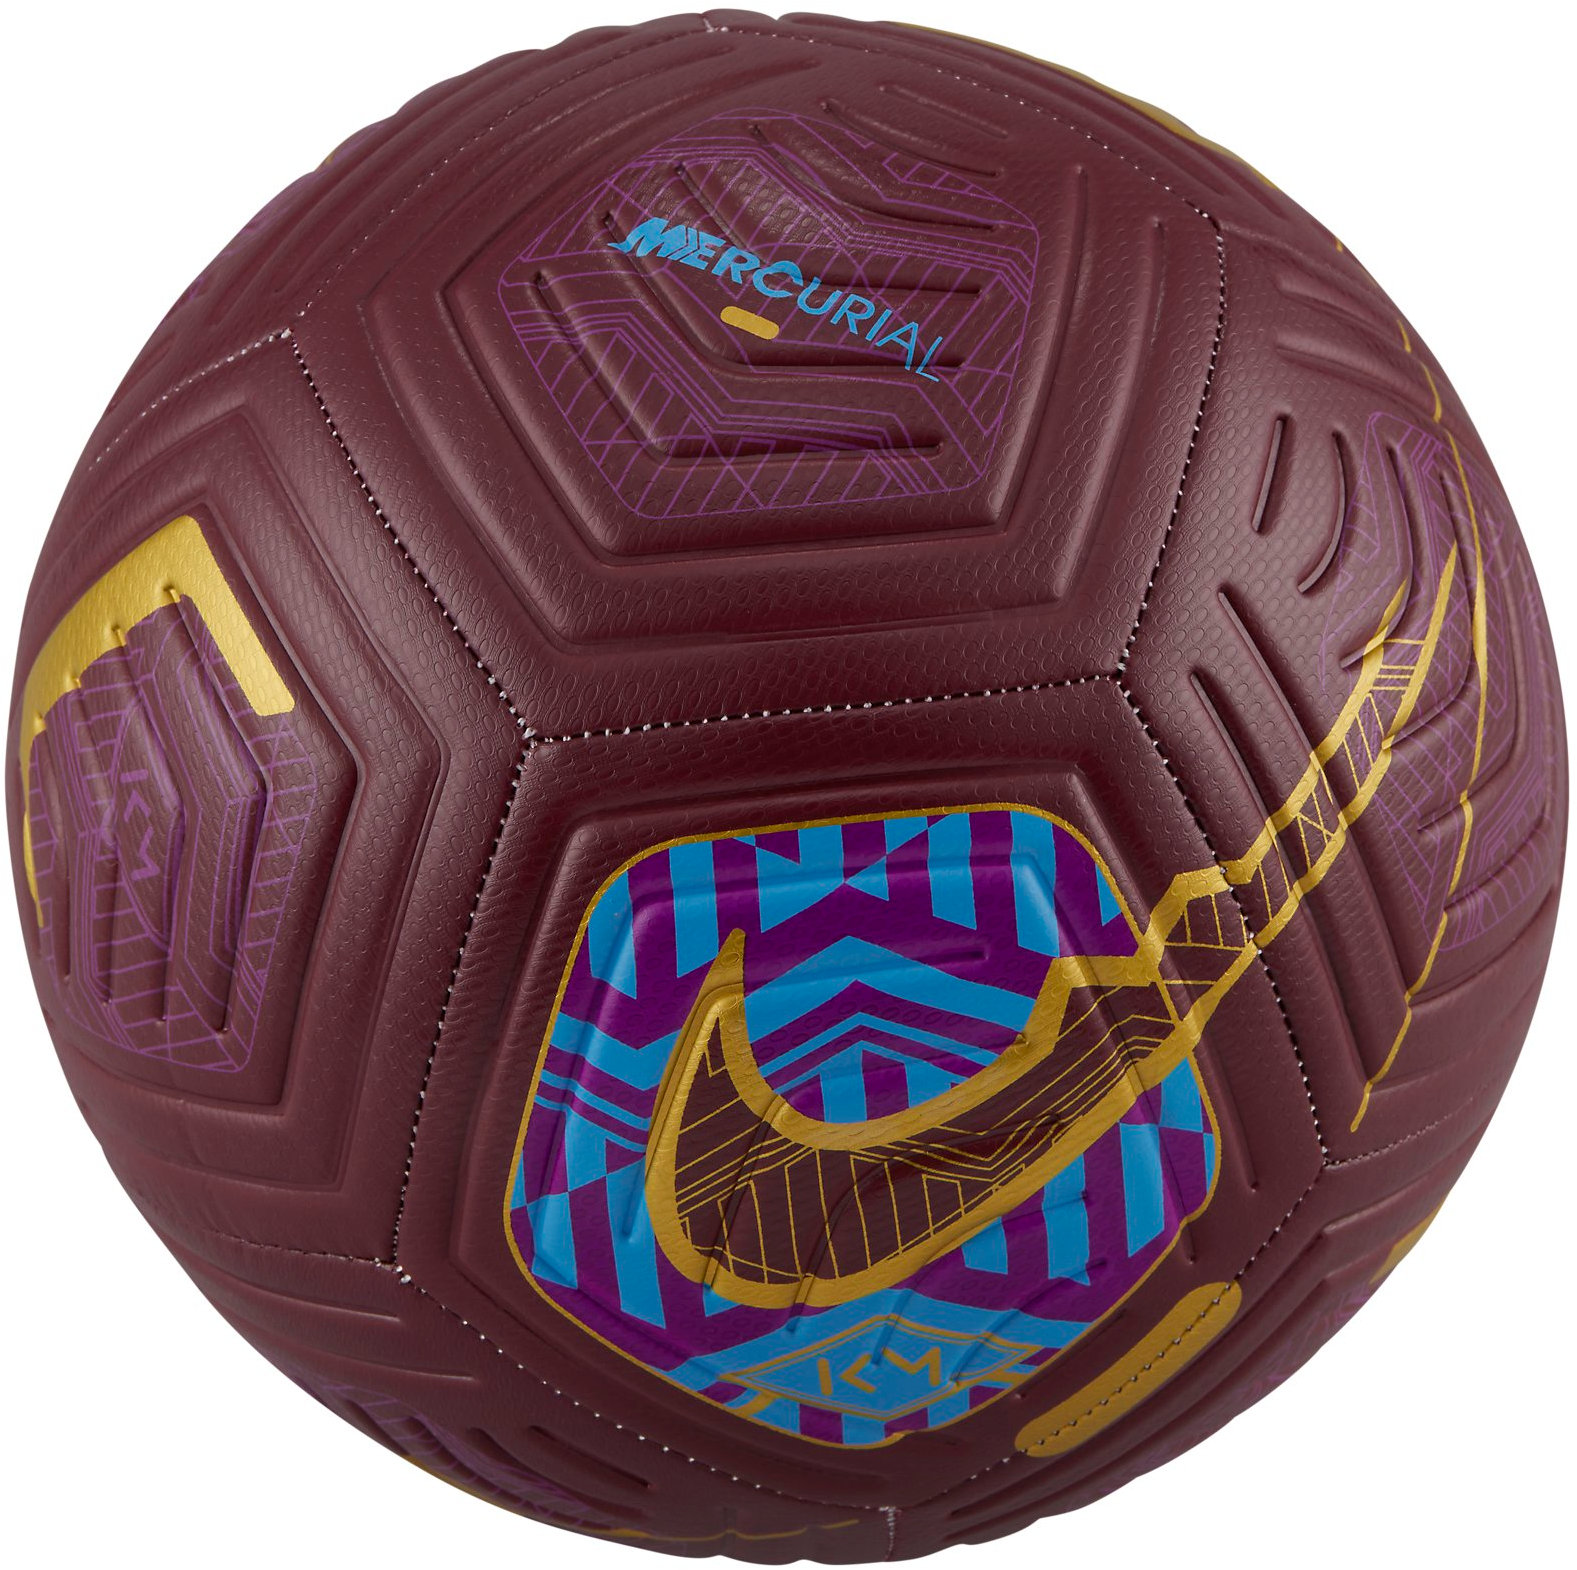 Ballon football loisir Nk ptch - fa22 - Nike